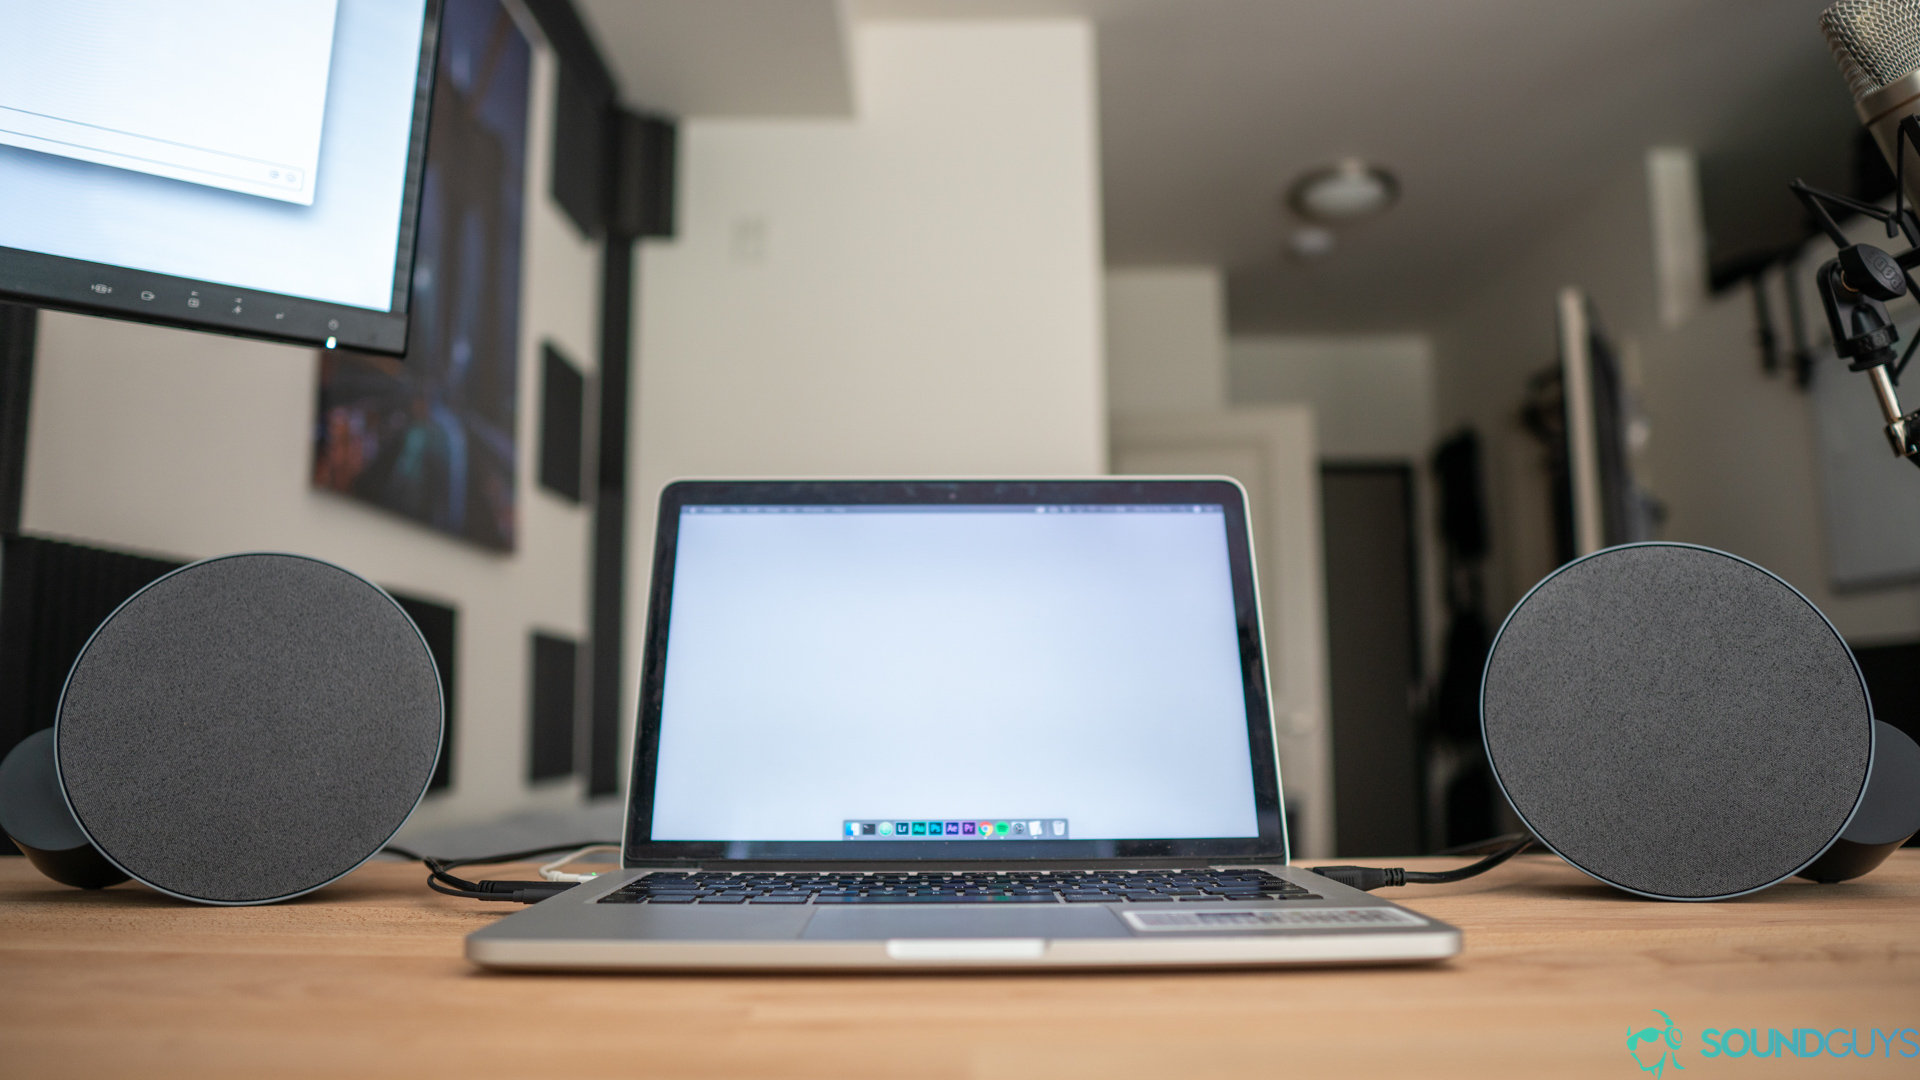 The MX Sound next to a laptop on the desk. 